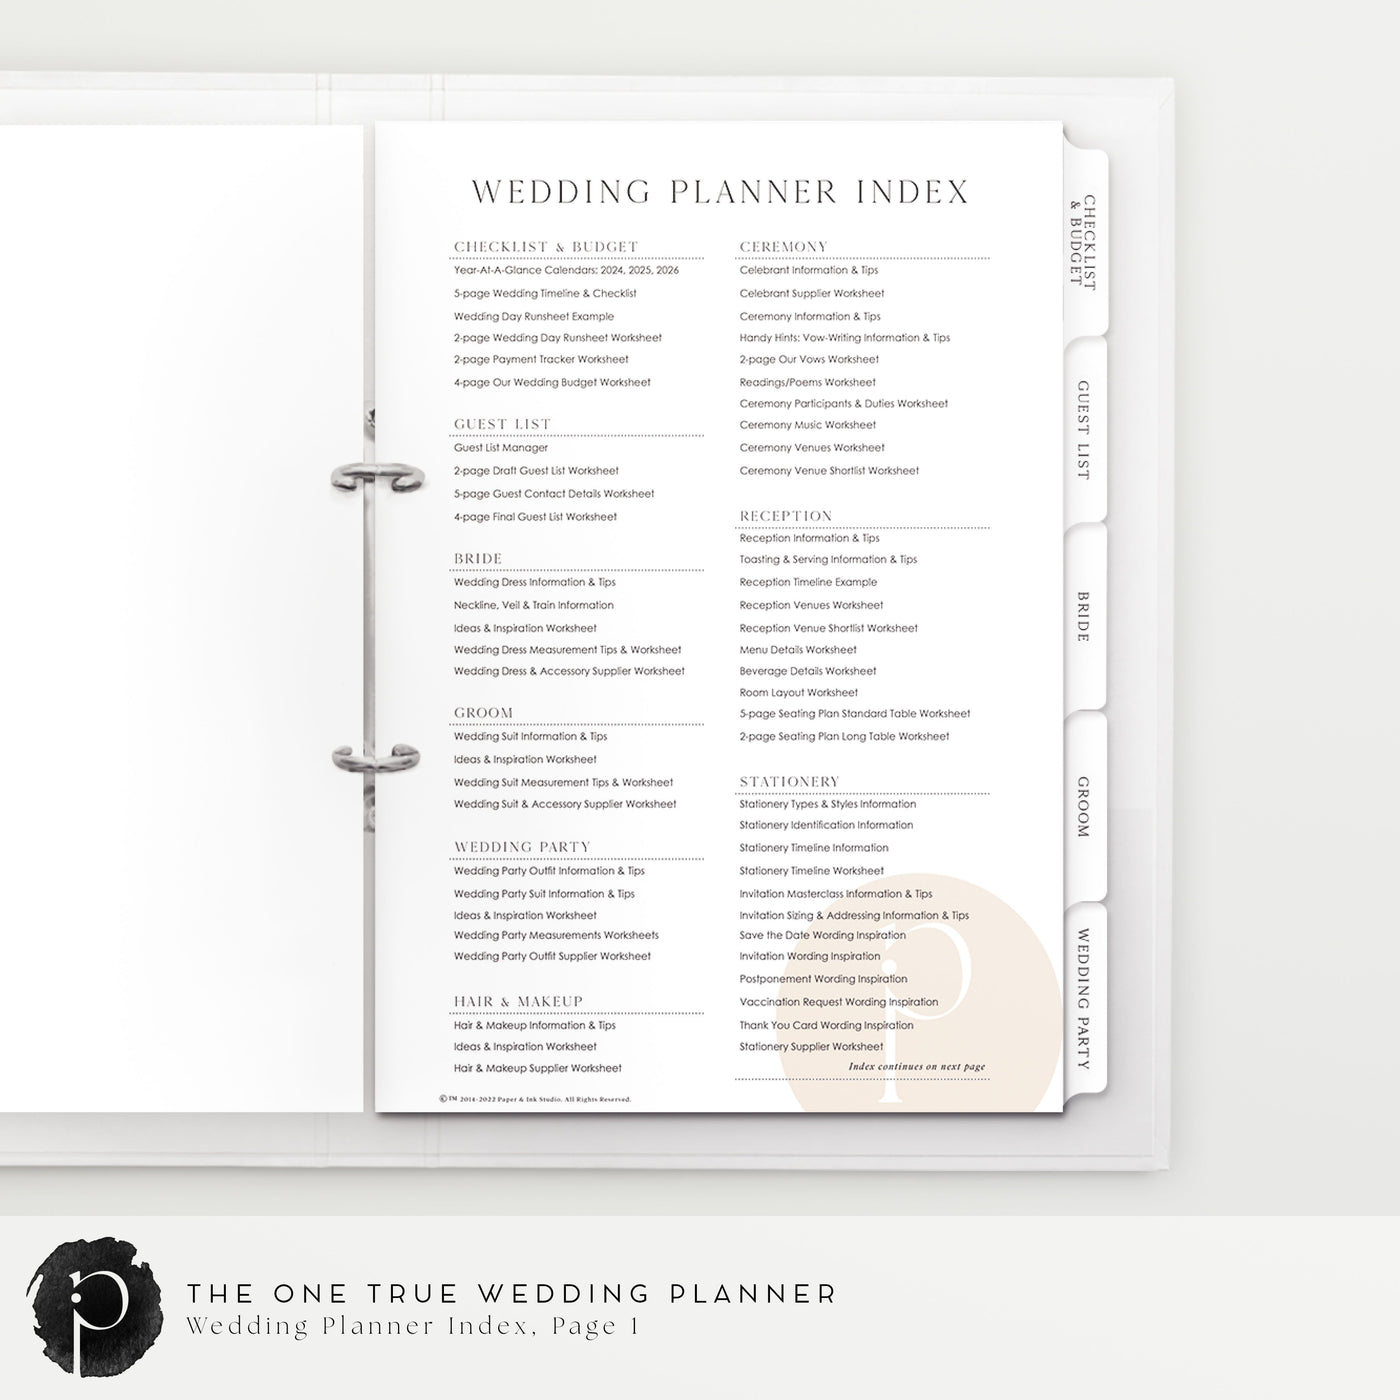 Personalised Wedding Planner & Organiser - Ultimate Guide w Checklists – Bianca